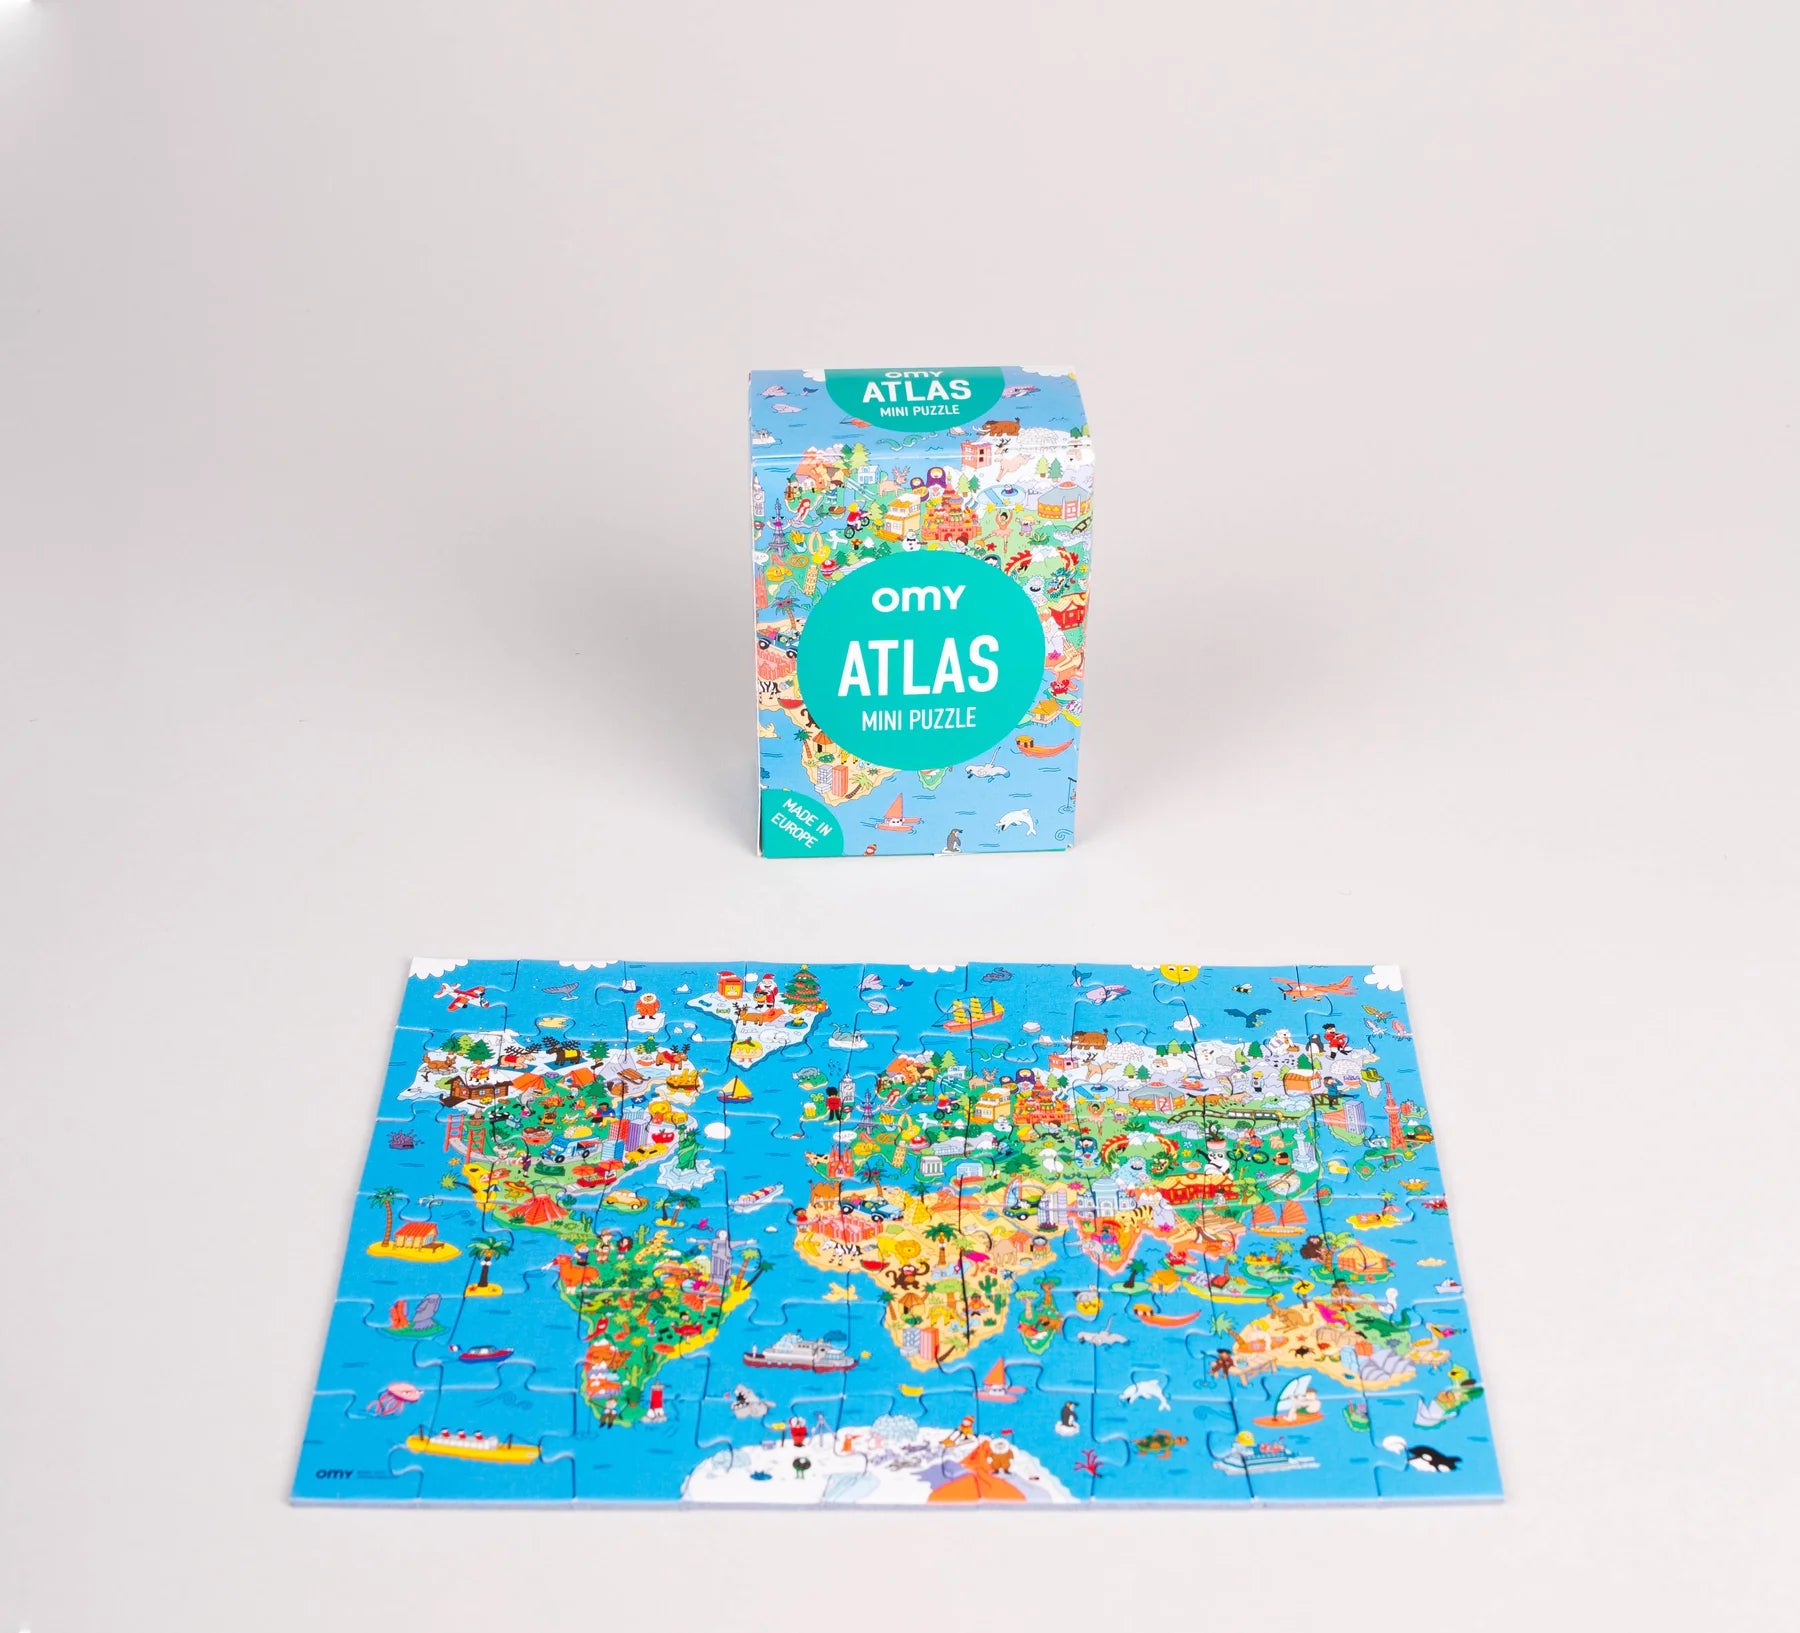 Omy - Atlas mini-puzzle